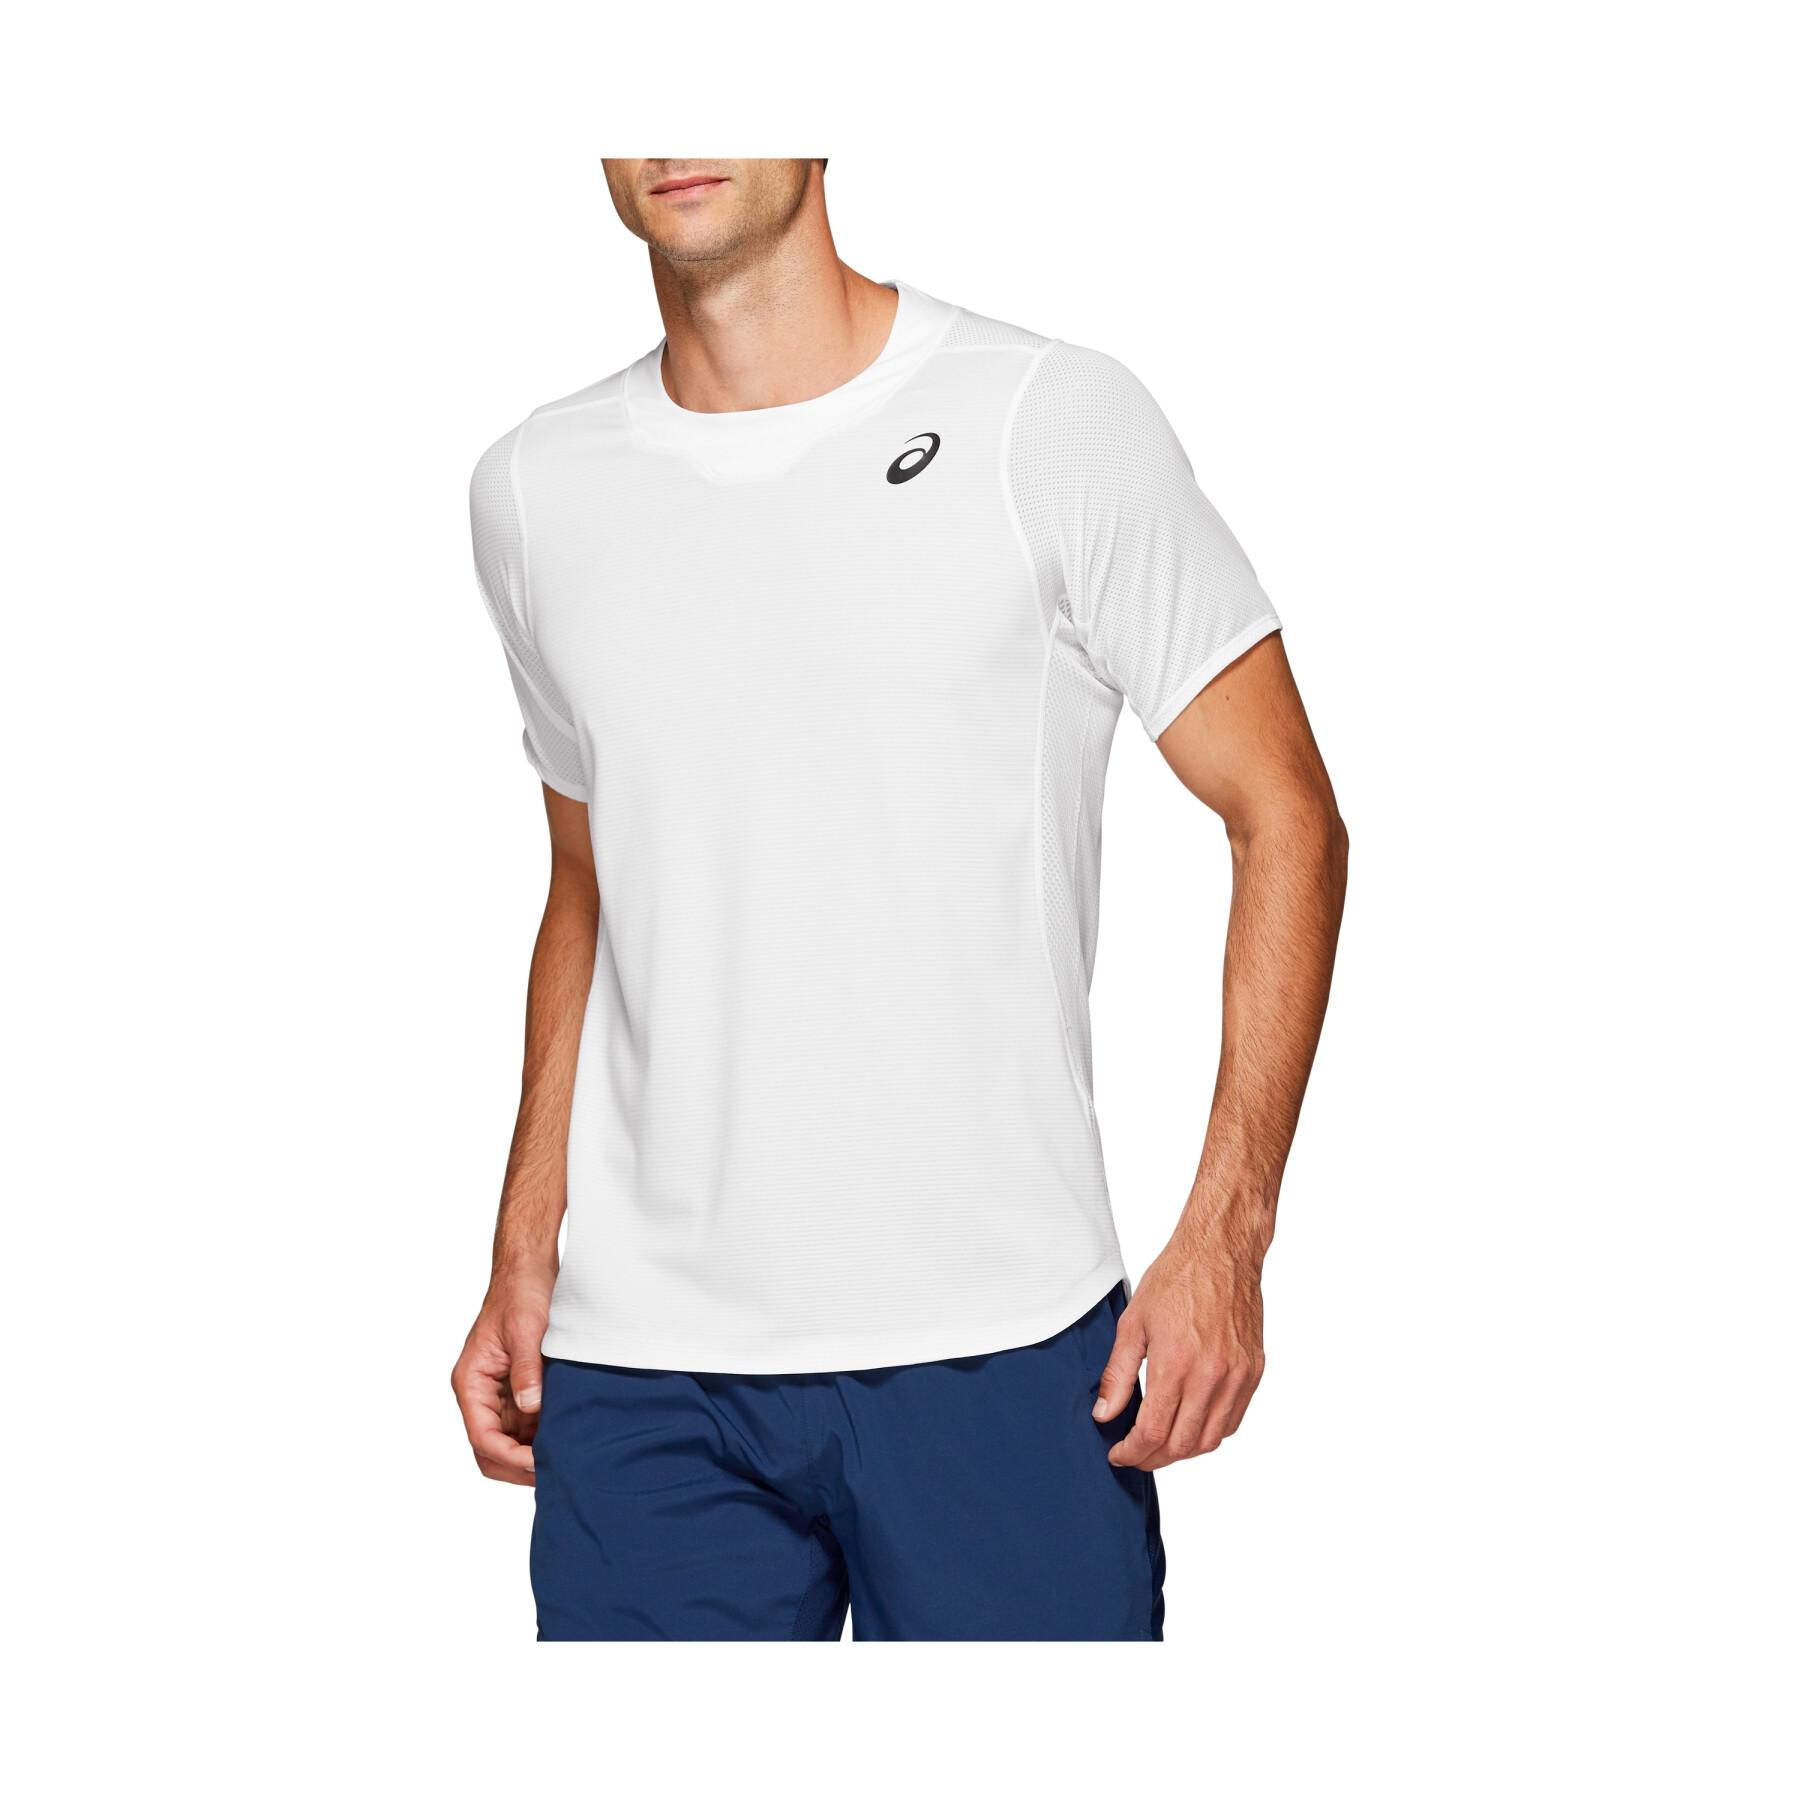 Koszulka Asics Gel Cool Top tennis